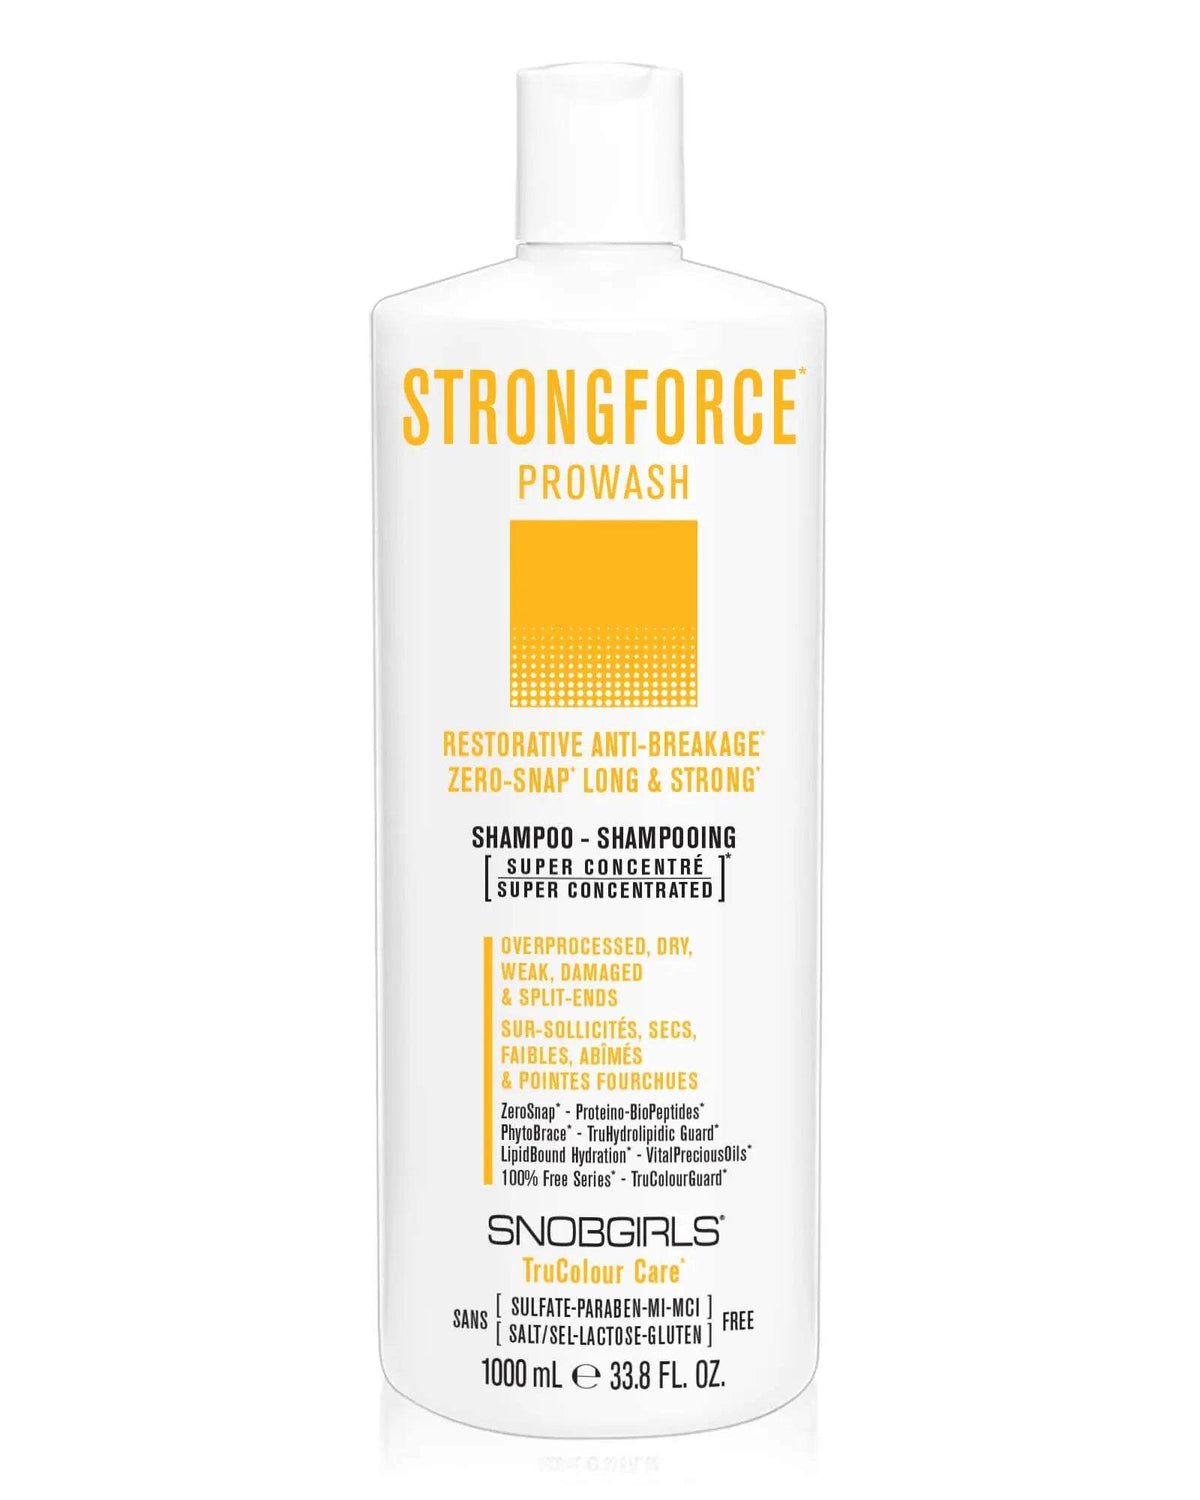 STRONGFORCE Prowash (shampoo) 33.8 FL. OZ. - SNOBGIRLS.com